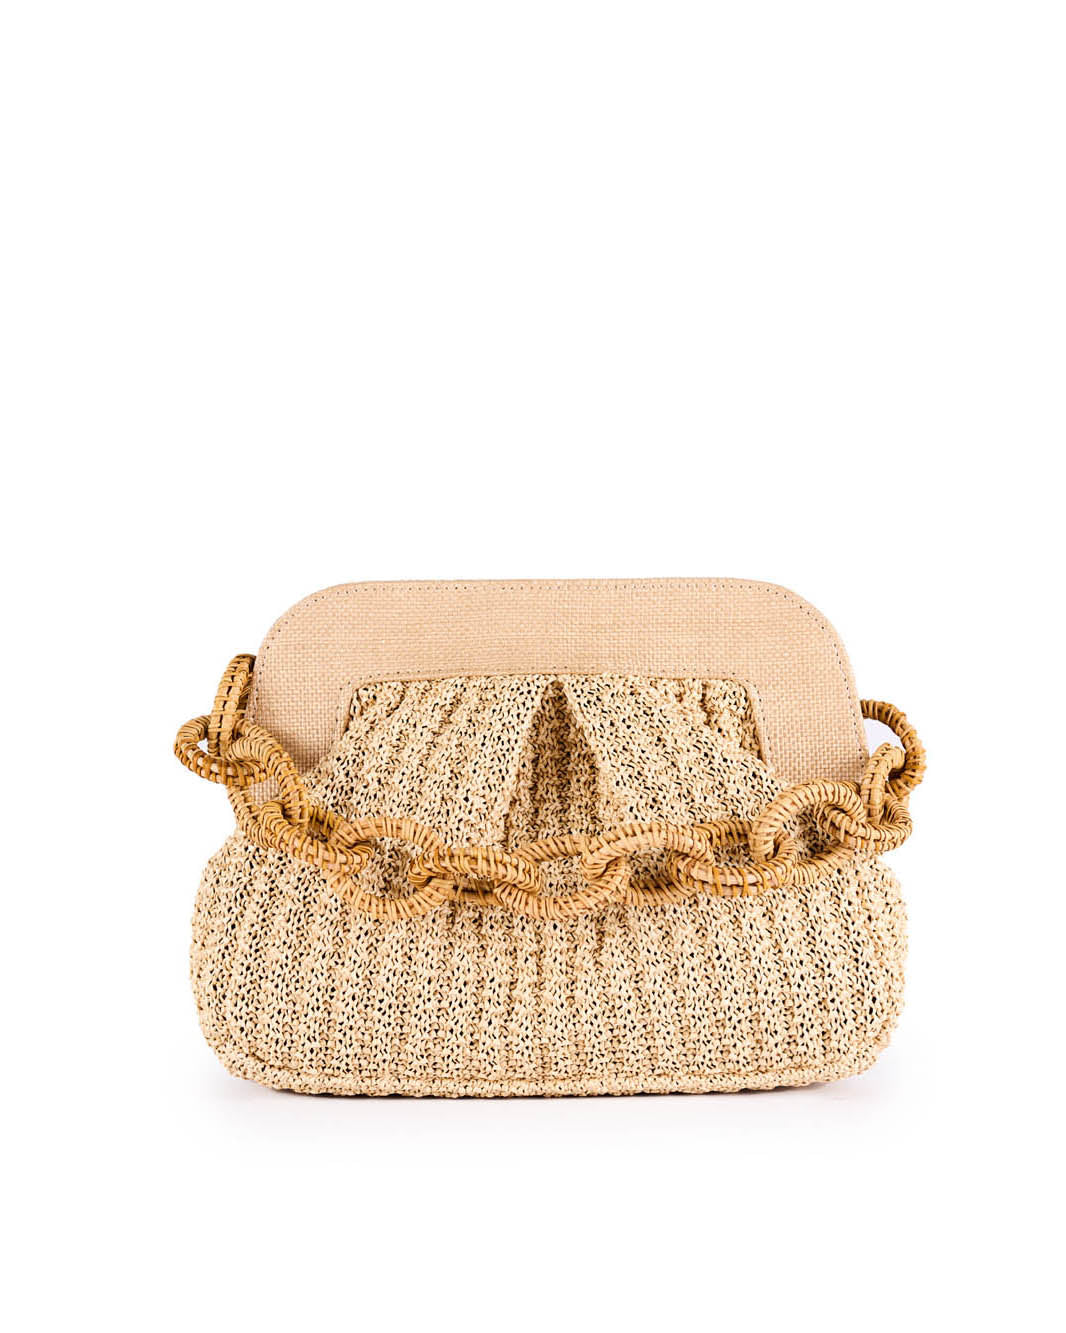 Woven straw handbag with braided rope handle